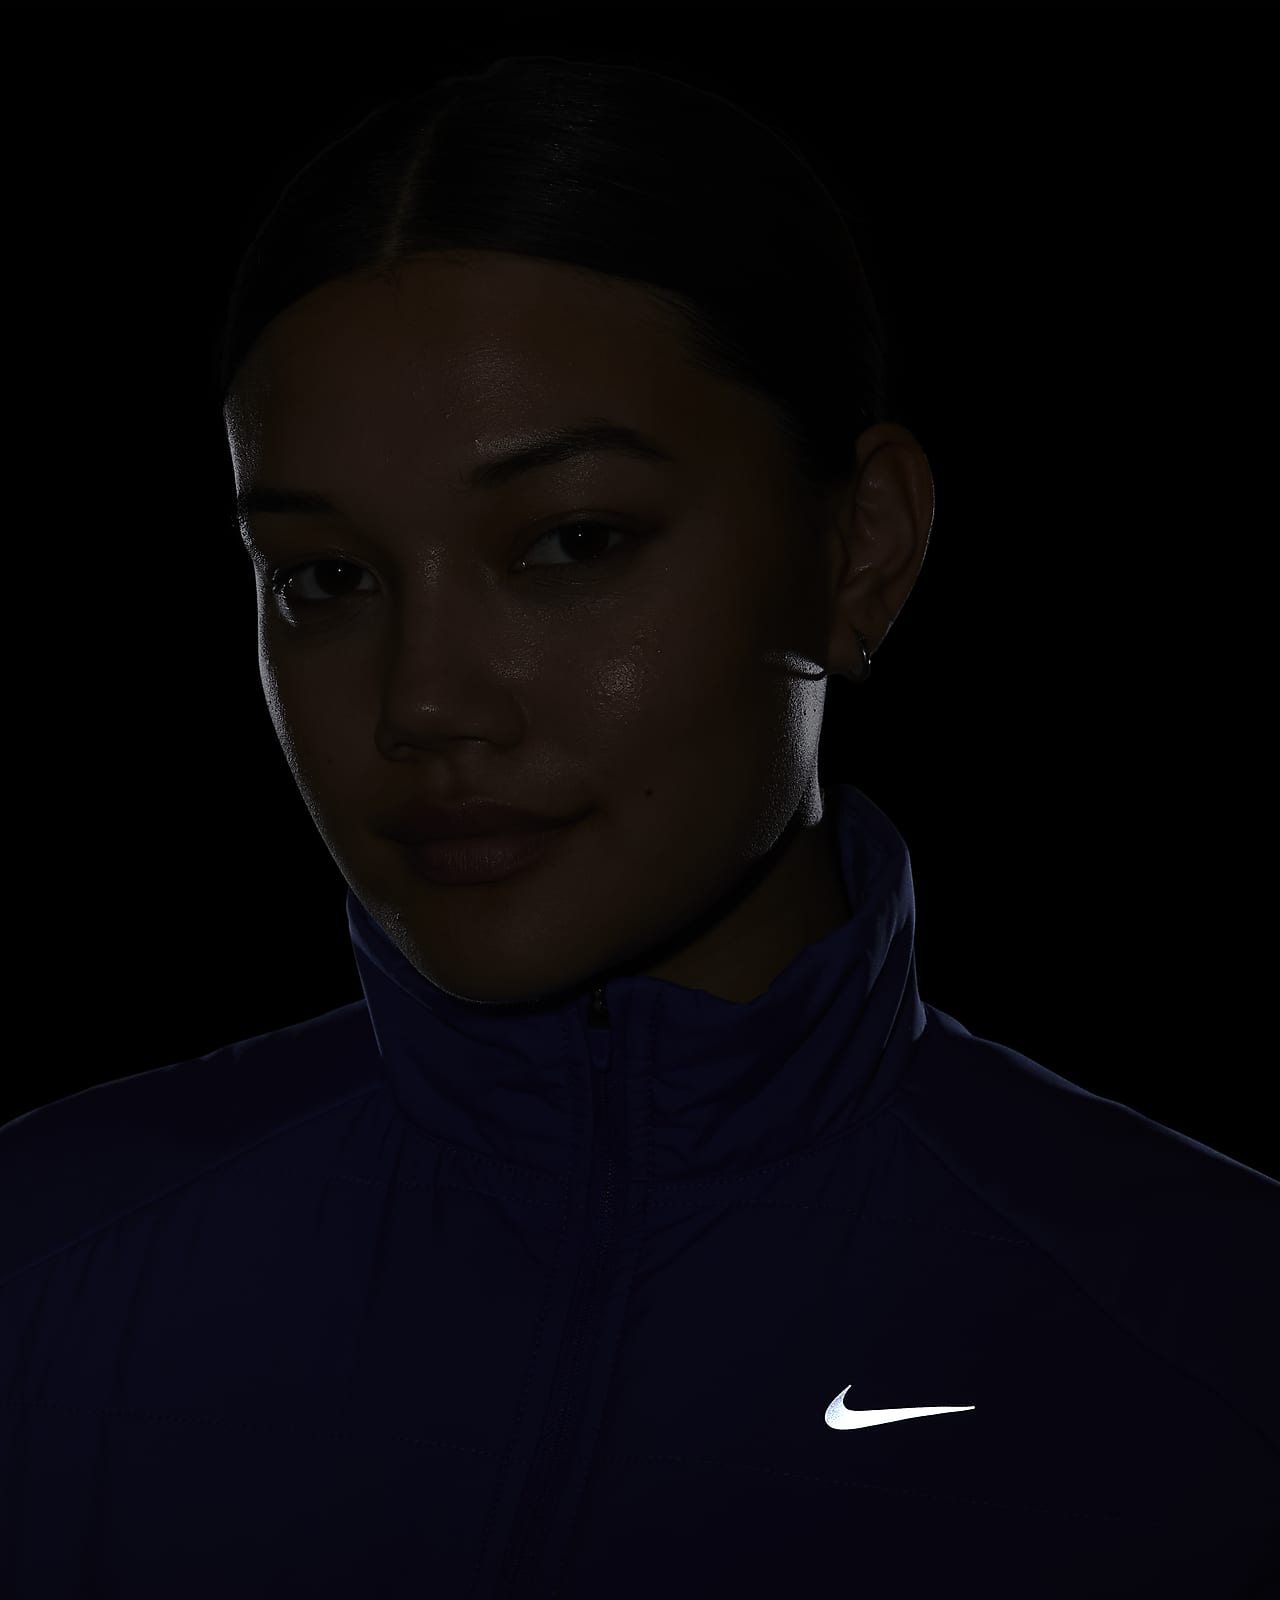 Nike Therma-FIT Swift Women's Running Vest